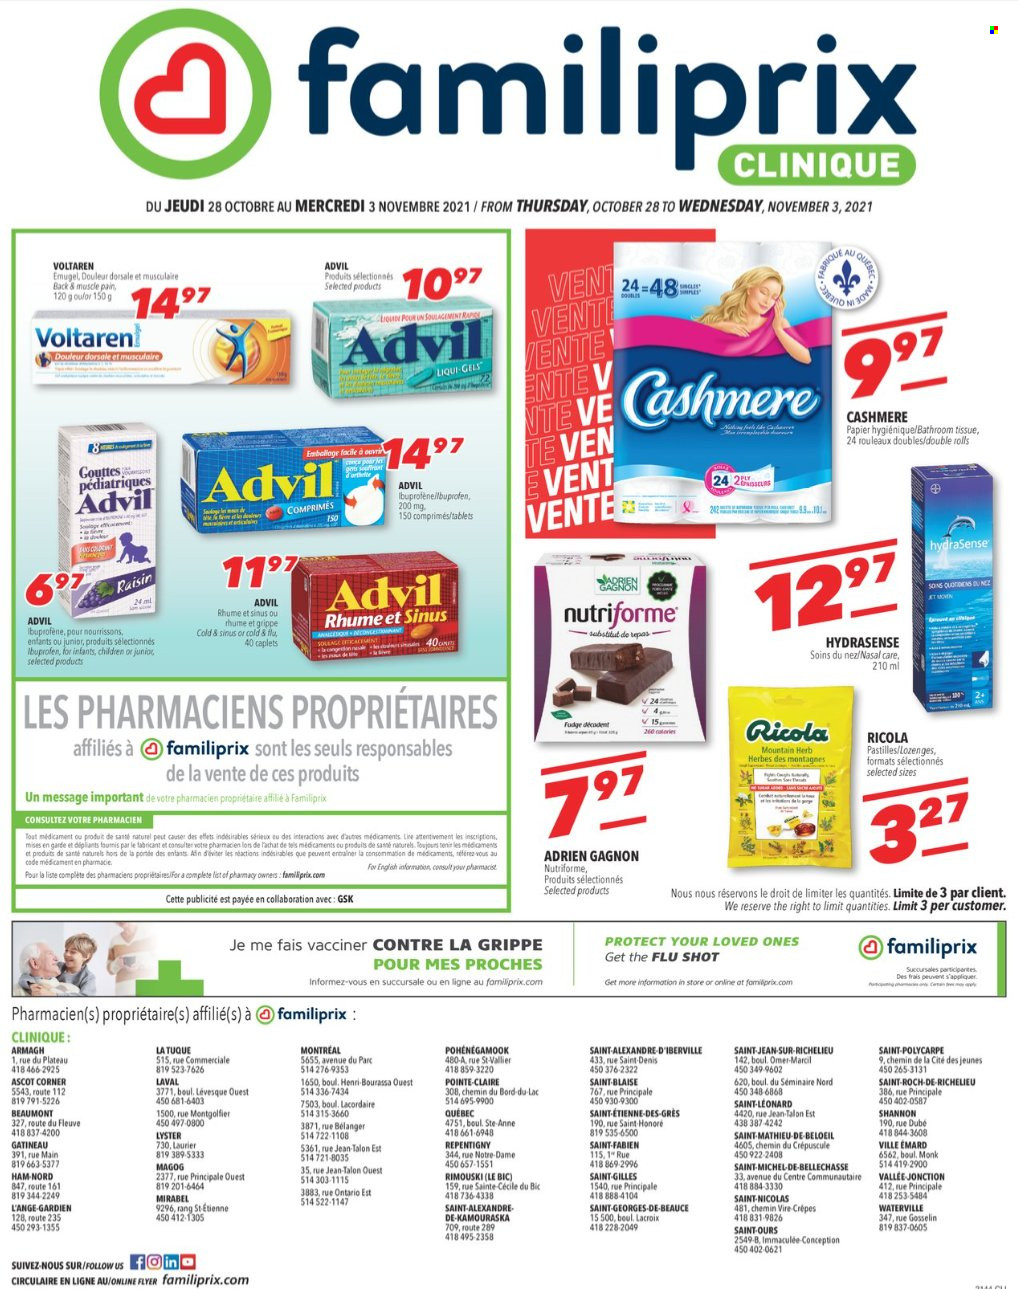 thumbnail - Familiprix Clinique Flyer - October 28, 2021 - November 03, 2021 - Sales products - Ricola, pastilles, herbs, bath tissue, Clinique, BIC, Cold & Flu, Advil Rapid. Page 1.